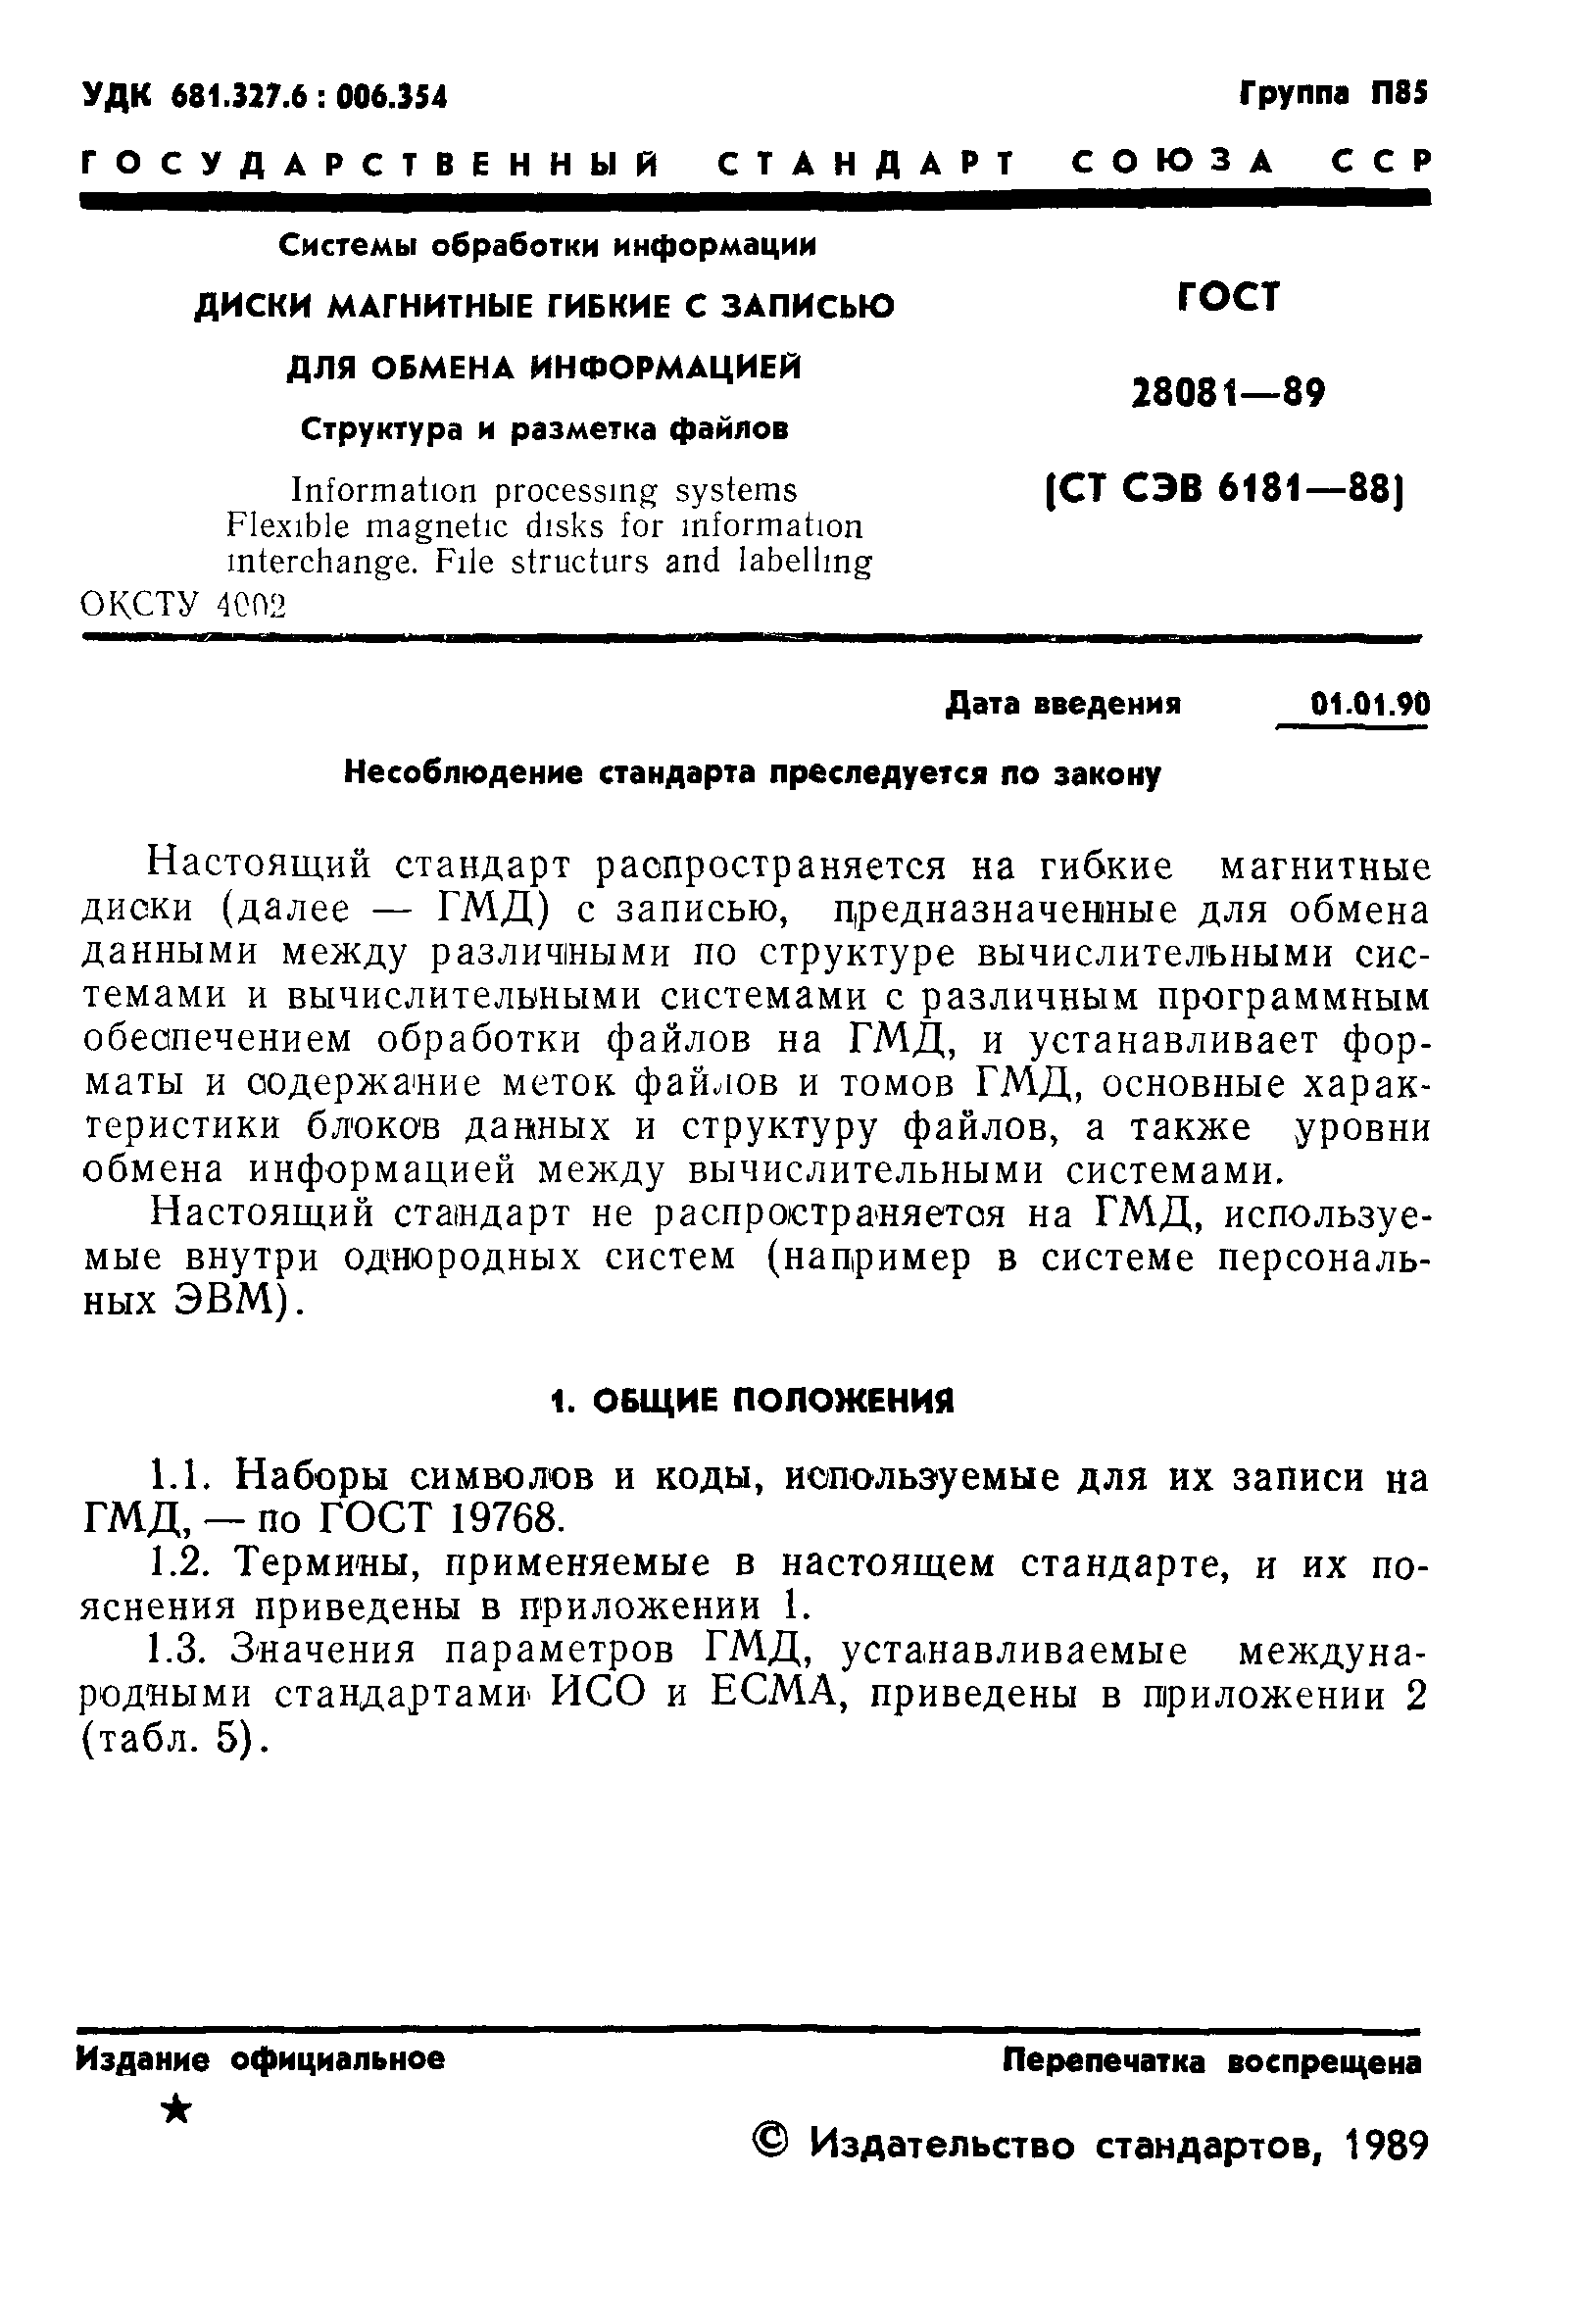 ГОСТ 28081-89